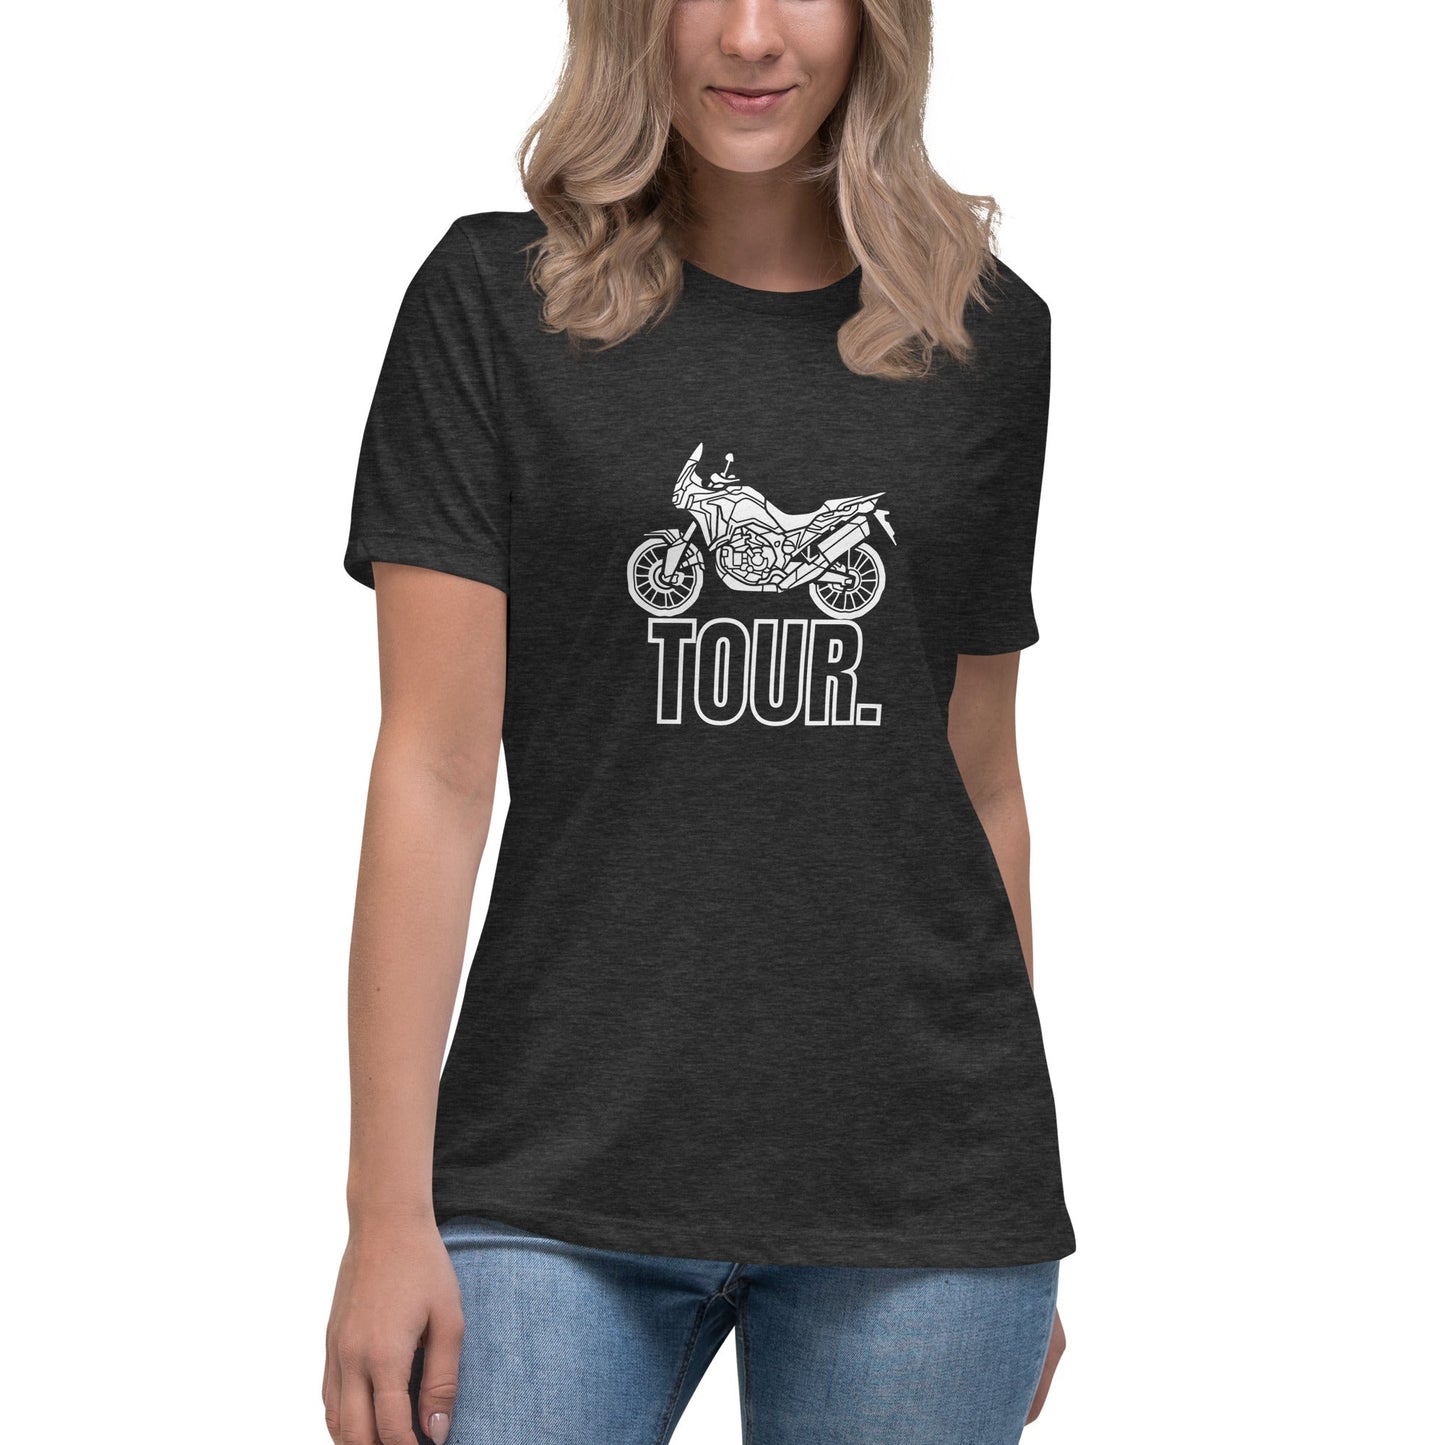 Women's Relaxed T-Shirt - Tour - The Vandi Company